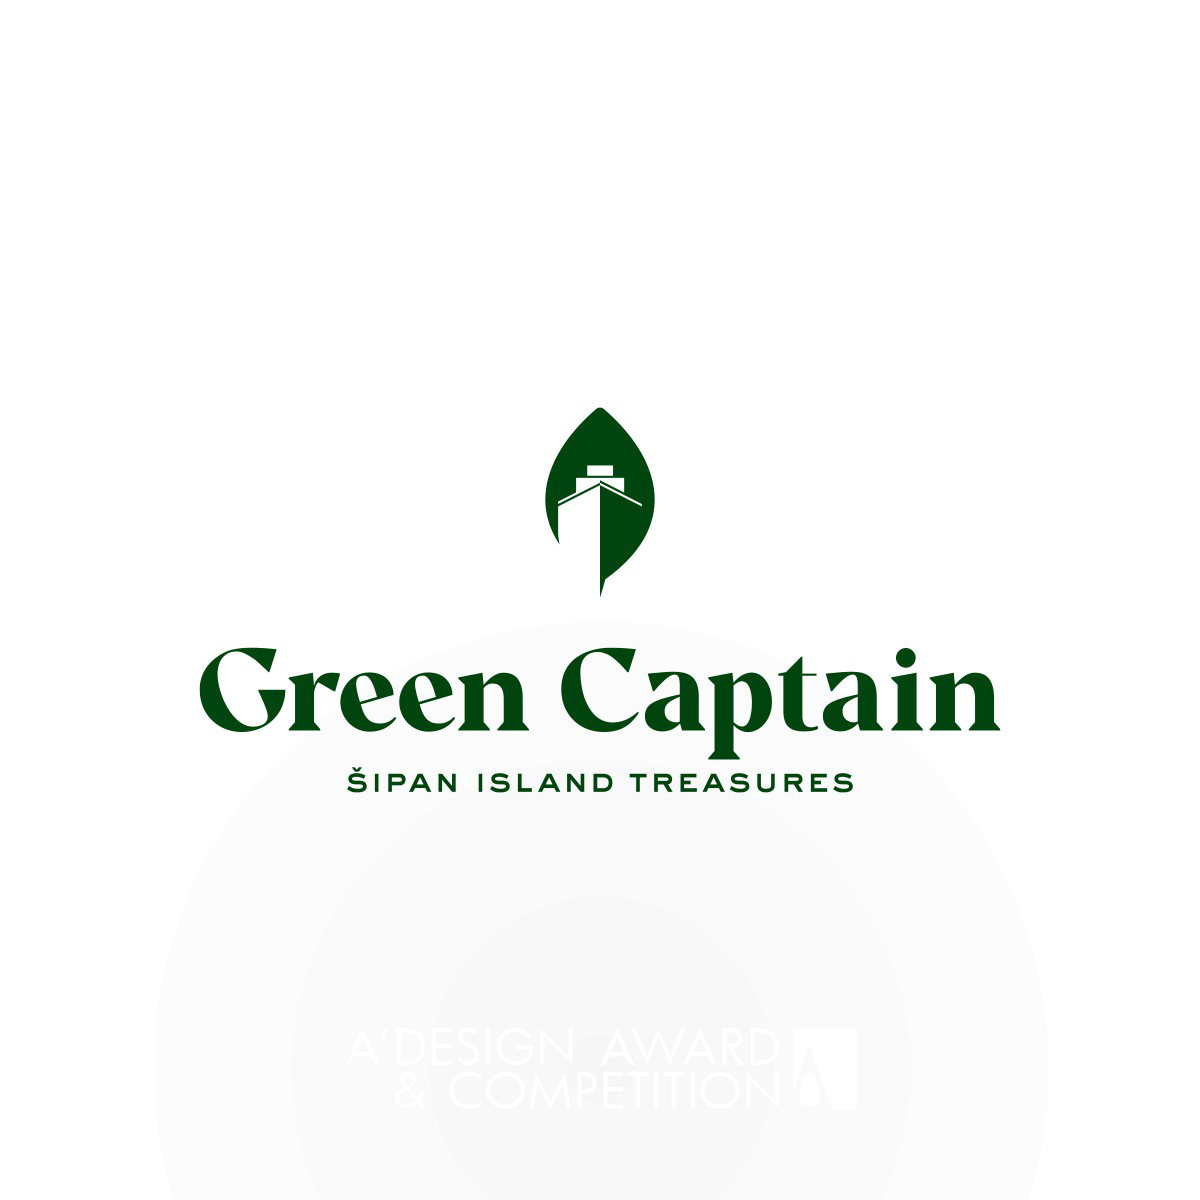 Green Captain Sipan Island Treasures